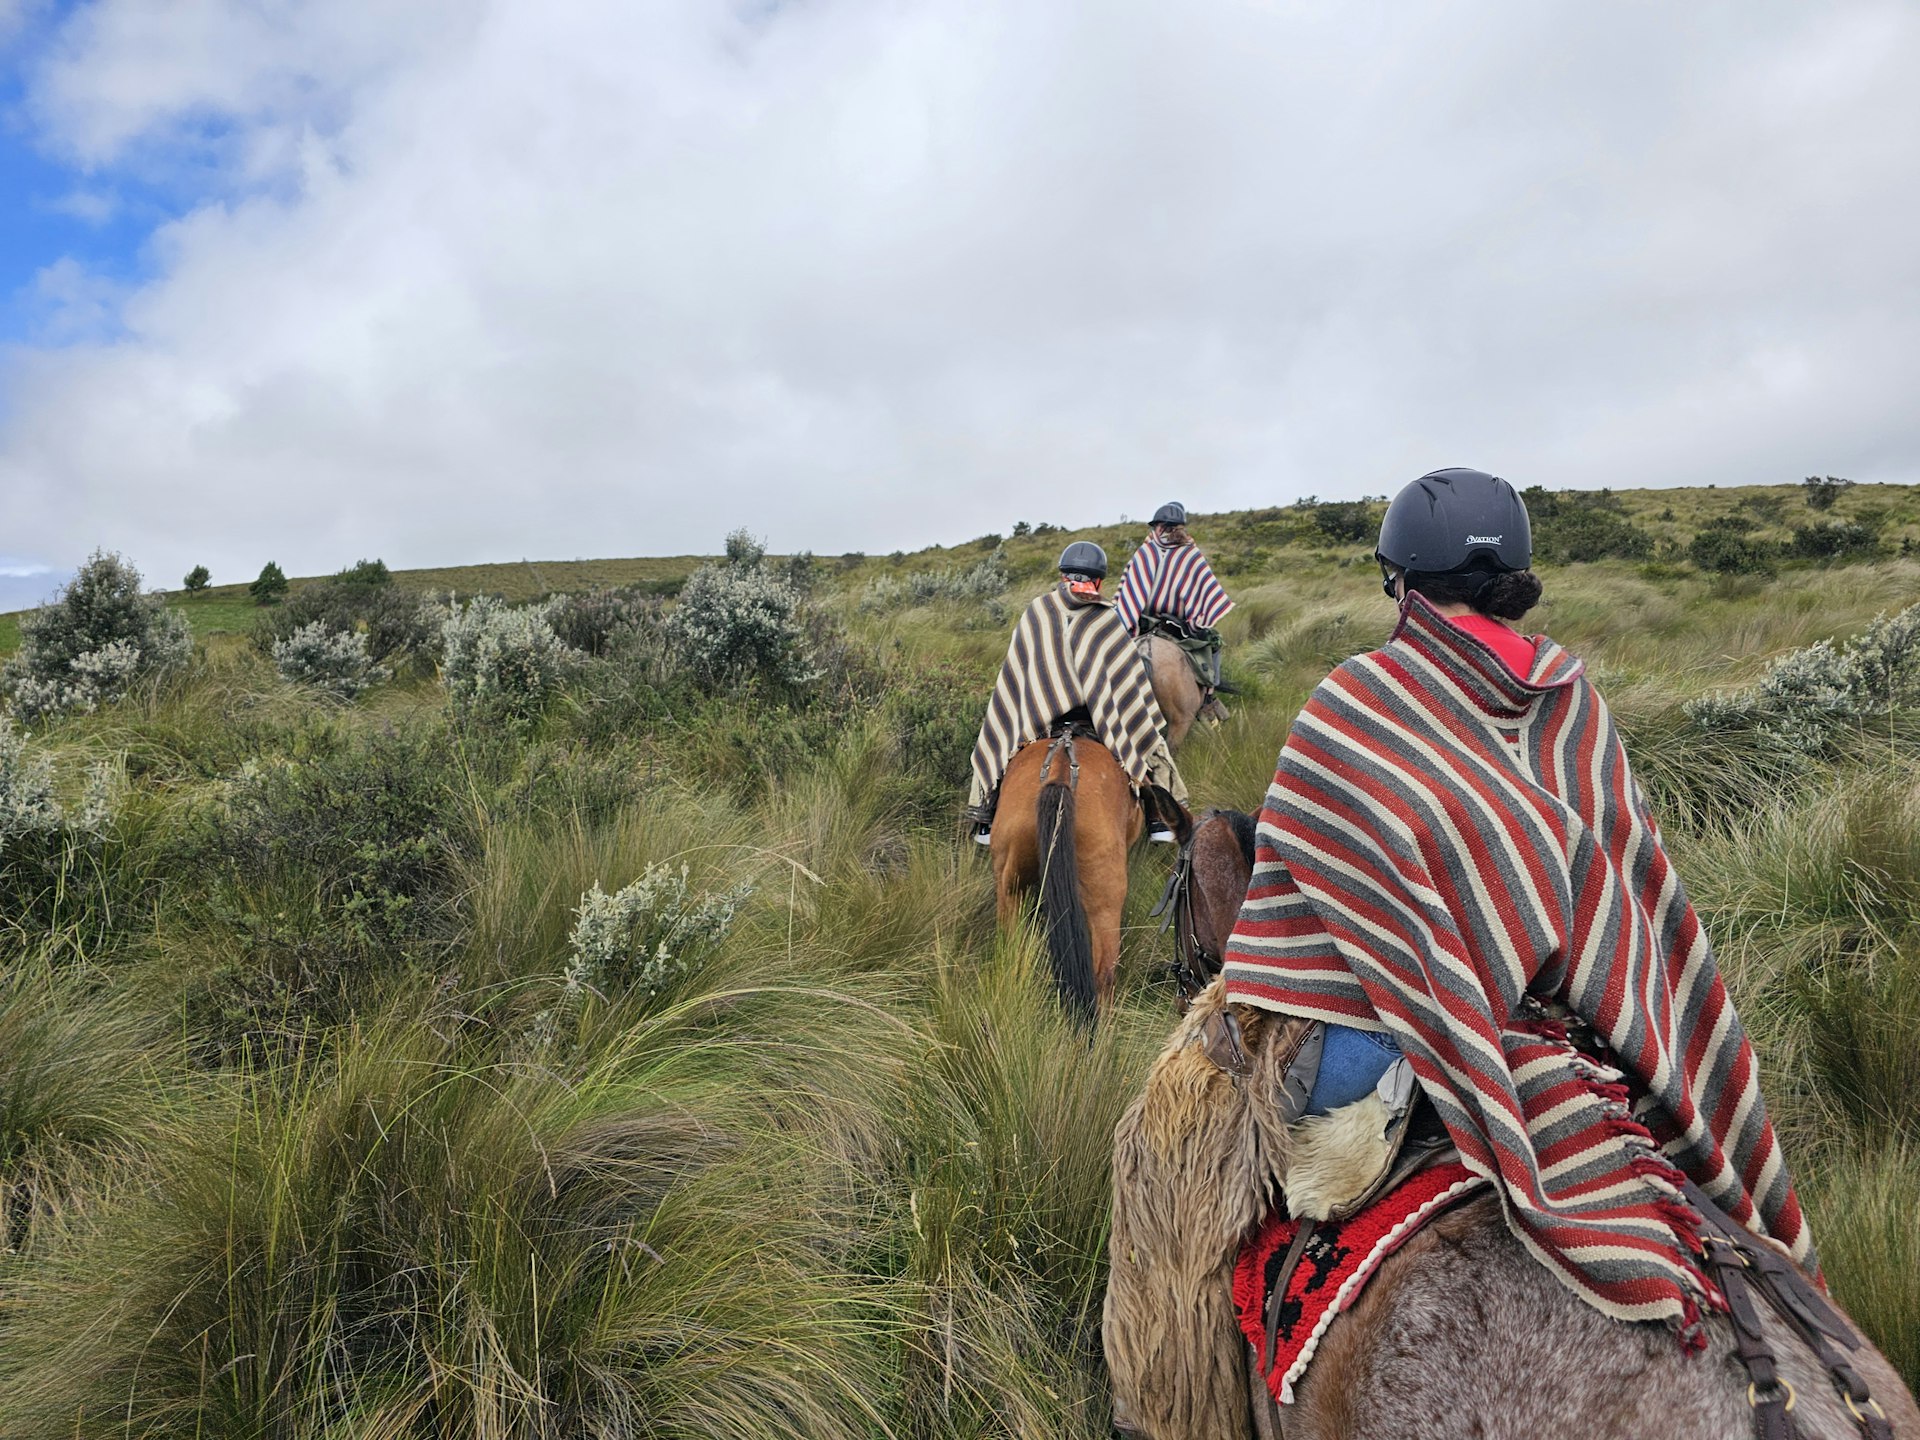 Chamidae and her mom horseback riding in Ecuador